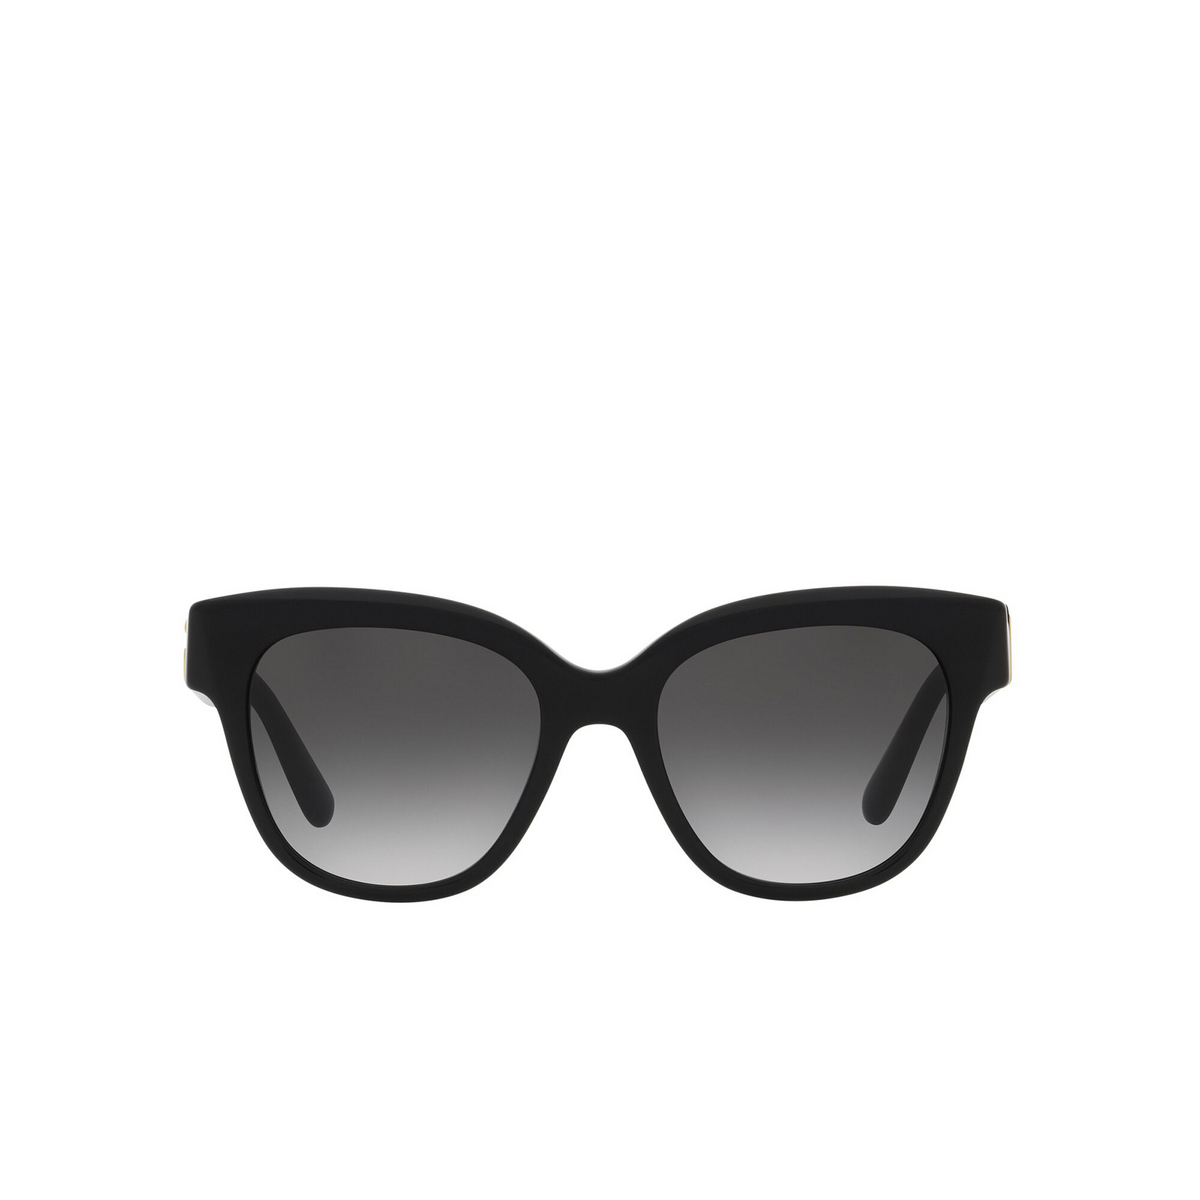 Dolce & Gabbana DG4407 Sunglasses 501/8G Black - front view